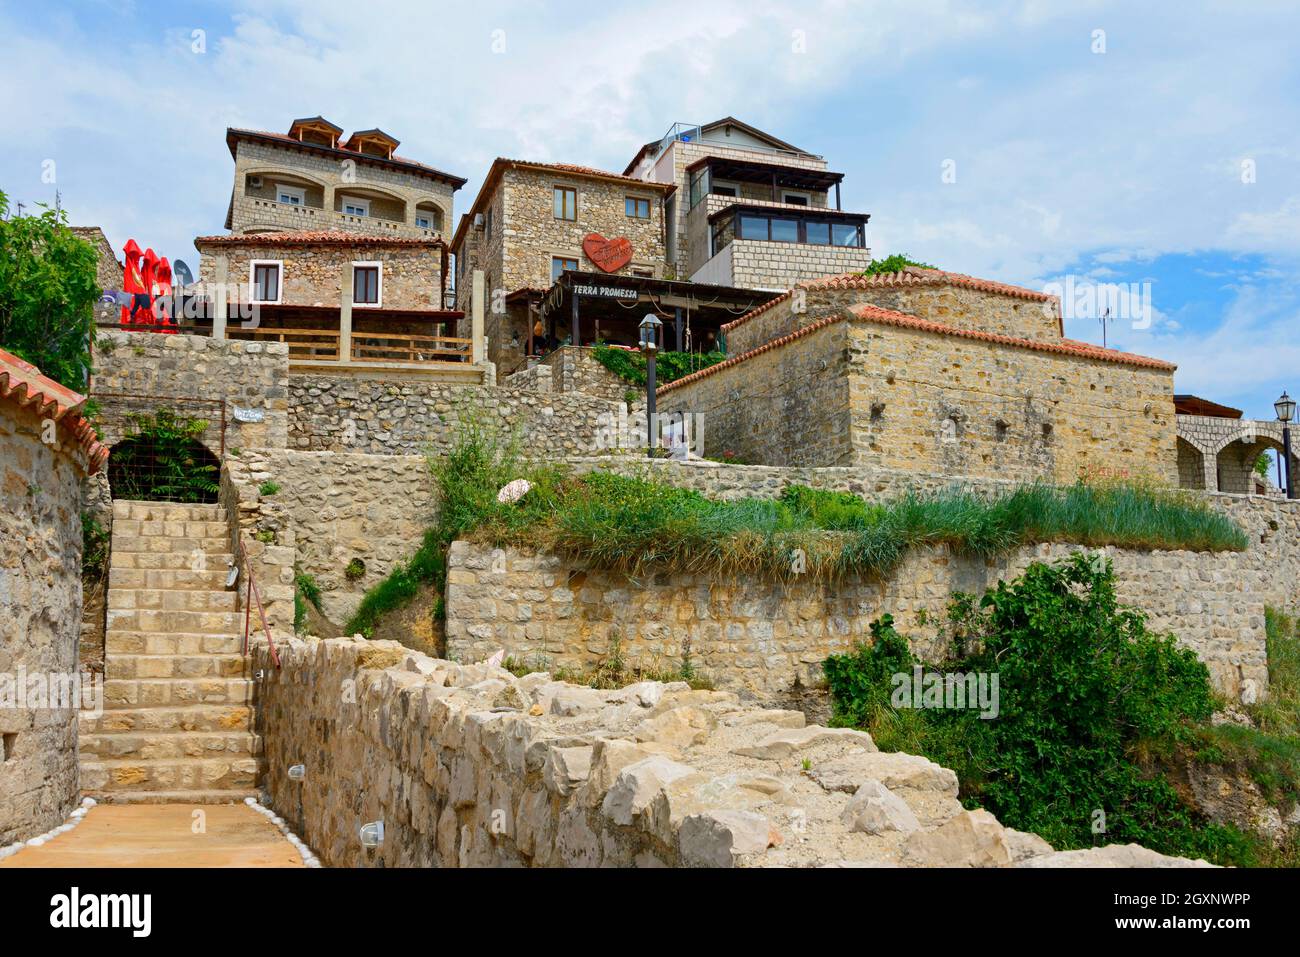 Restaurant Rock, Old Town, Stari Grad, Ulcinj, Ulqini, Montenegro Stock Photo